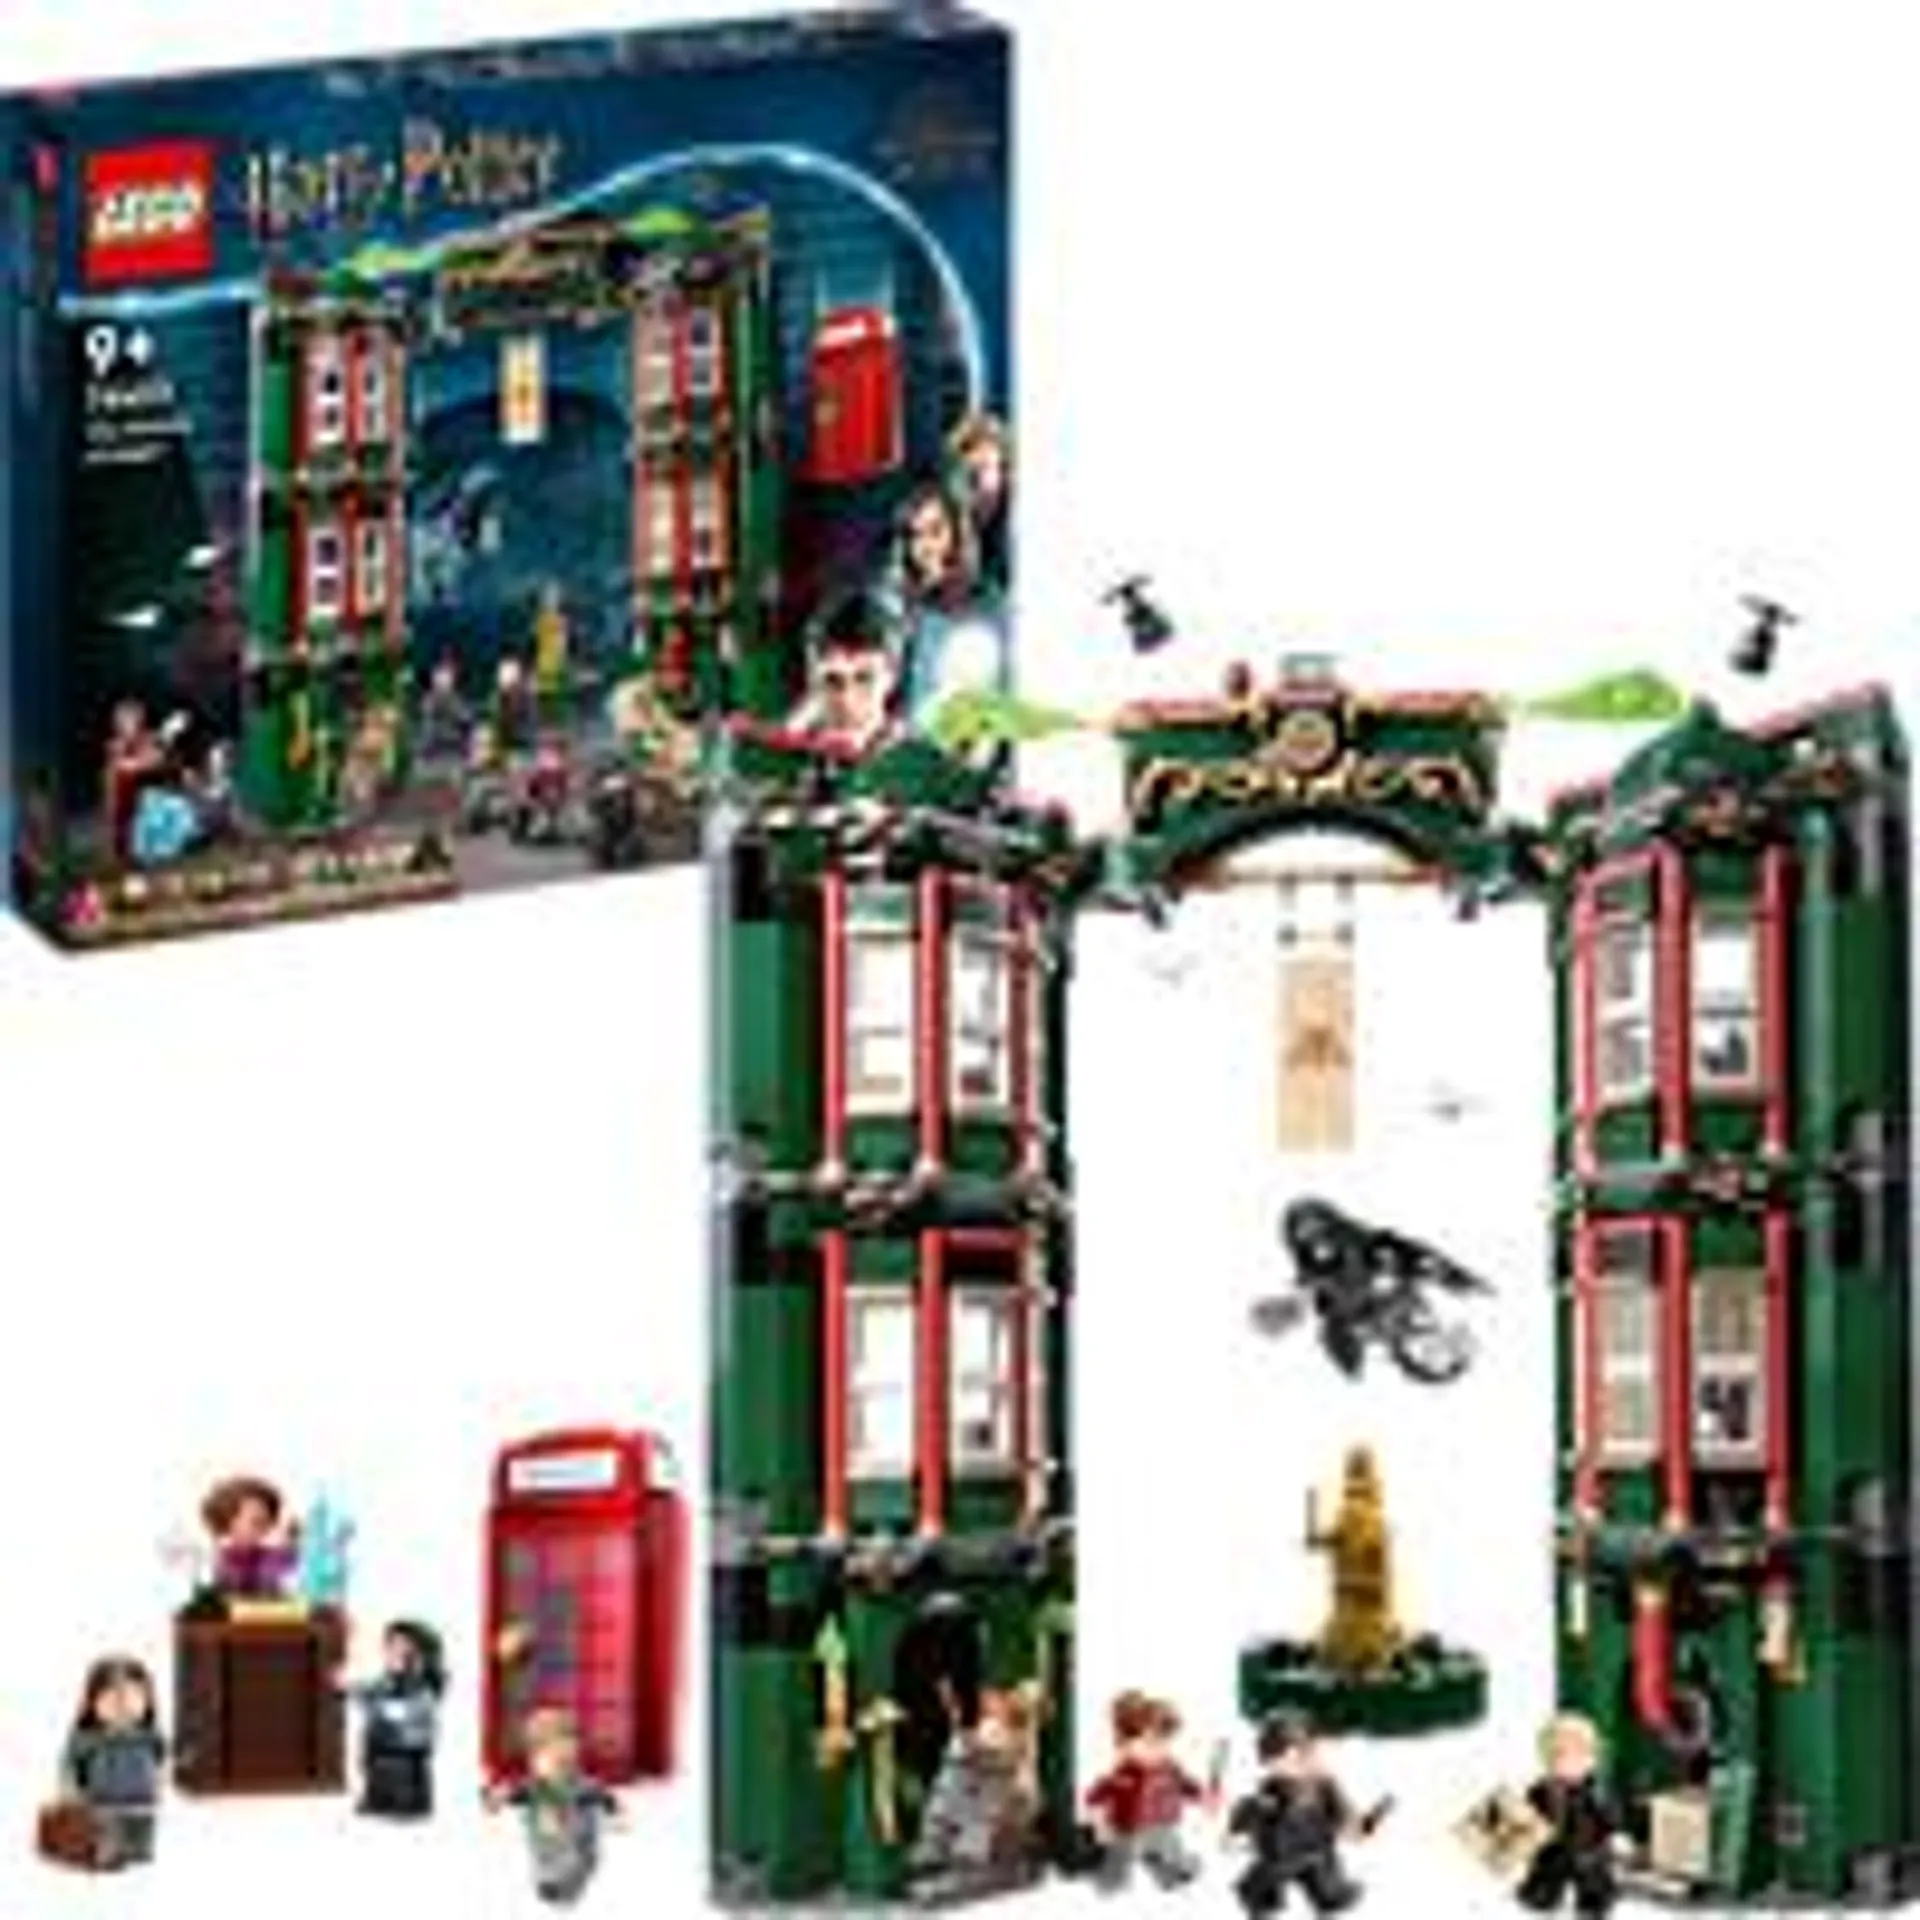 LEGO Harry Potter 76403 Zaubereiministerium Bausatz, Mehrfarbig